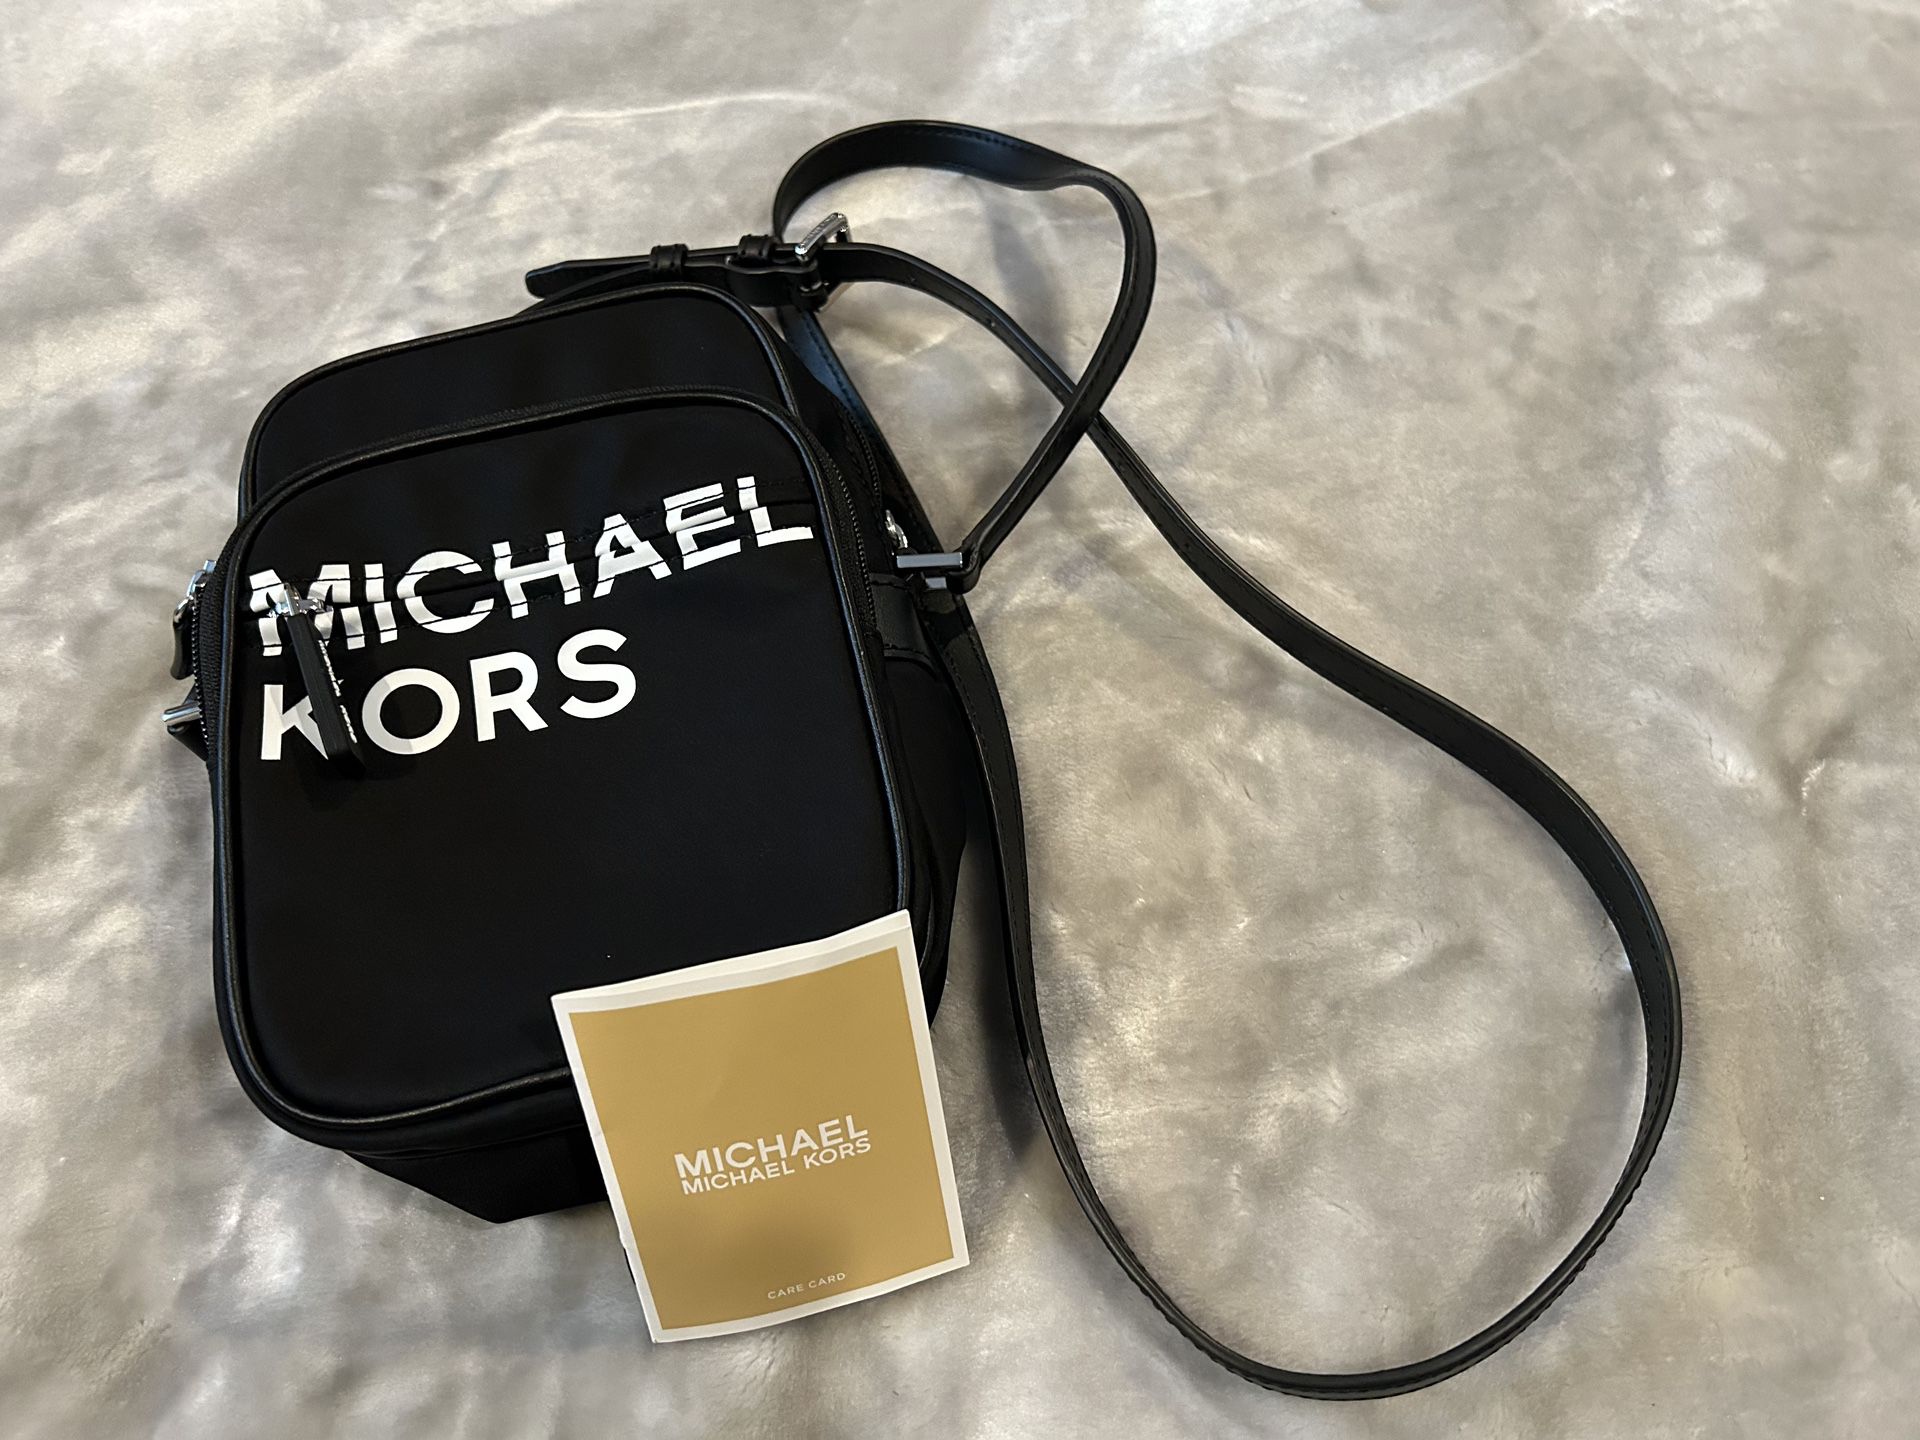 Michael Kors Medium Logo Convertible Crossbody Bag for Sale in Morrisville,  NC - OfferUp